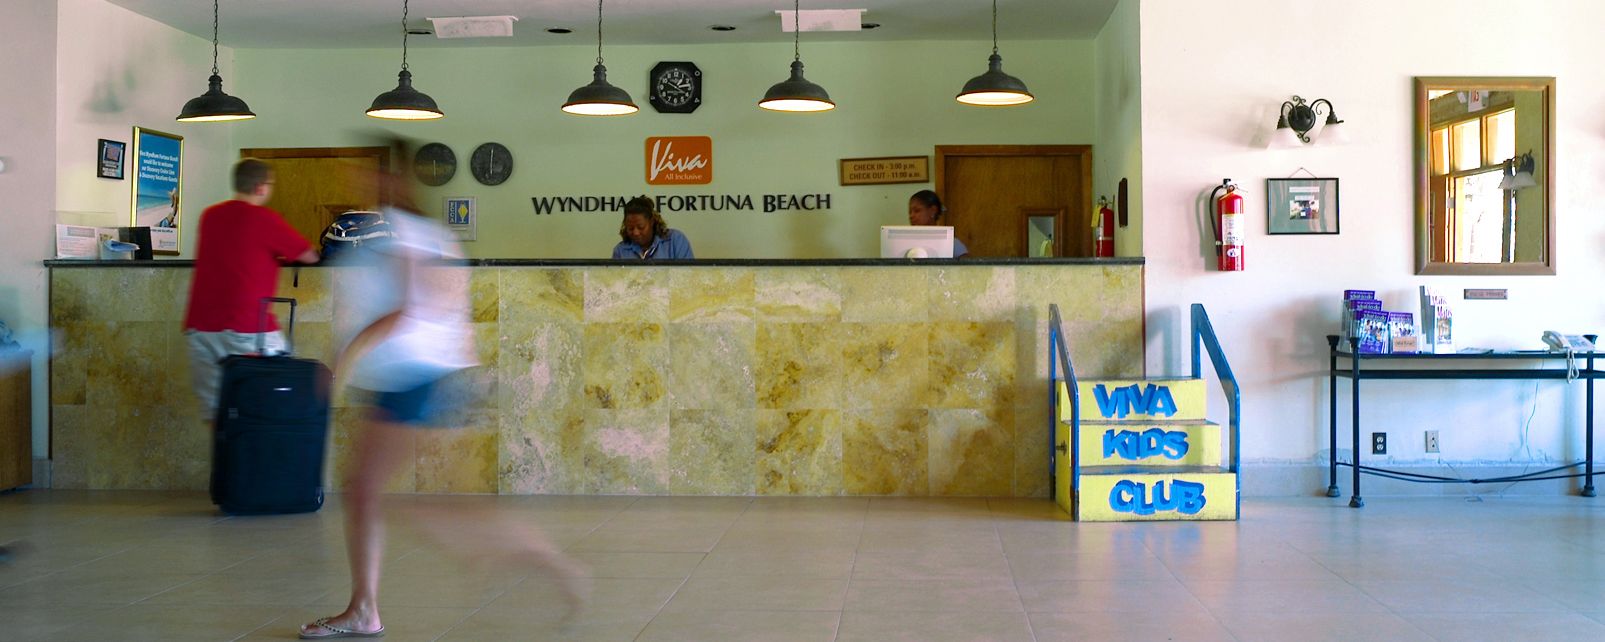 Hotel Viva Wyndham Fortuna Beach